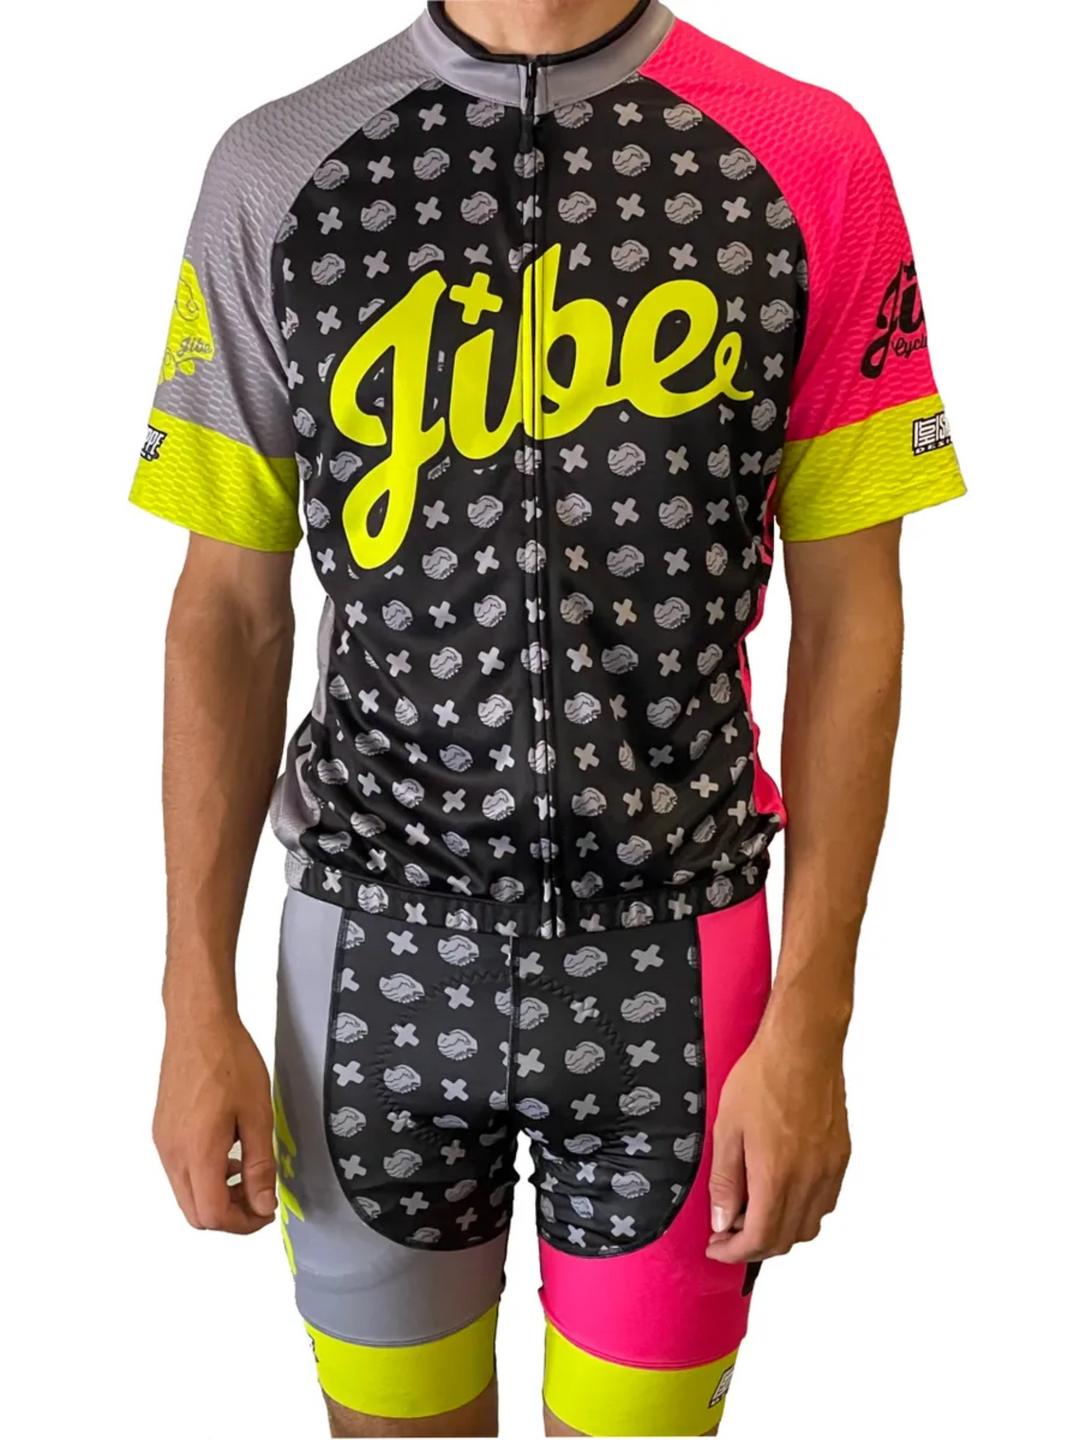 Jibe XC Jersey (Shirt Only)